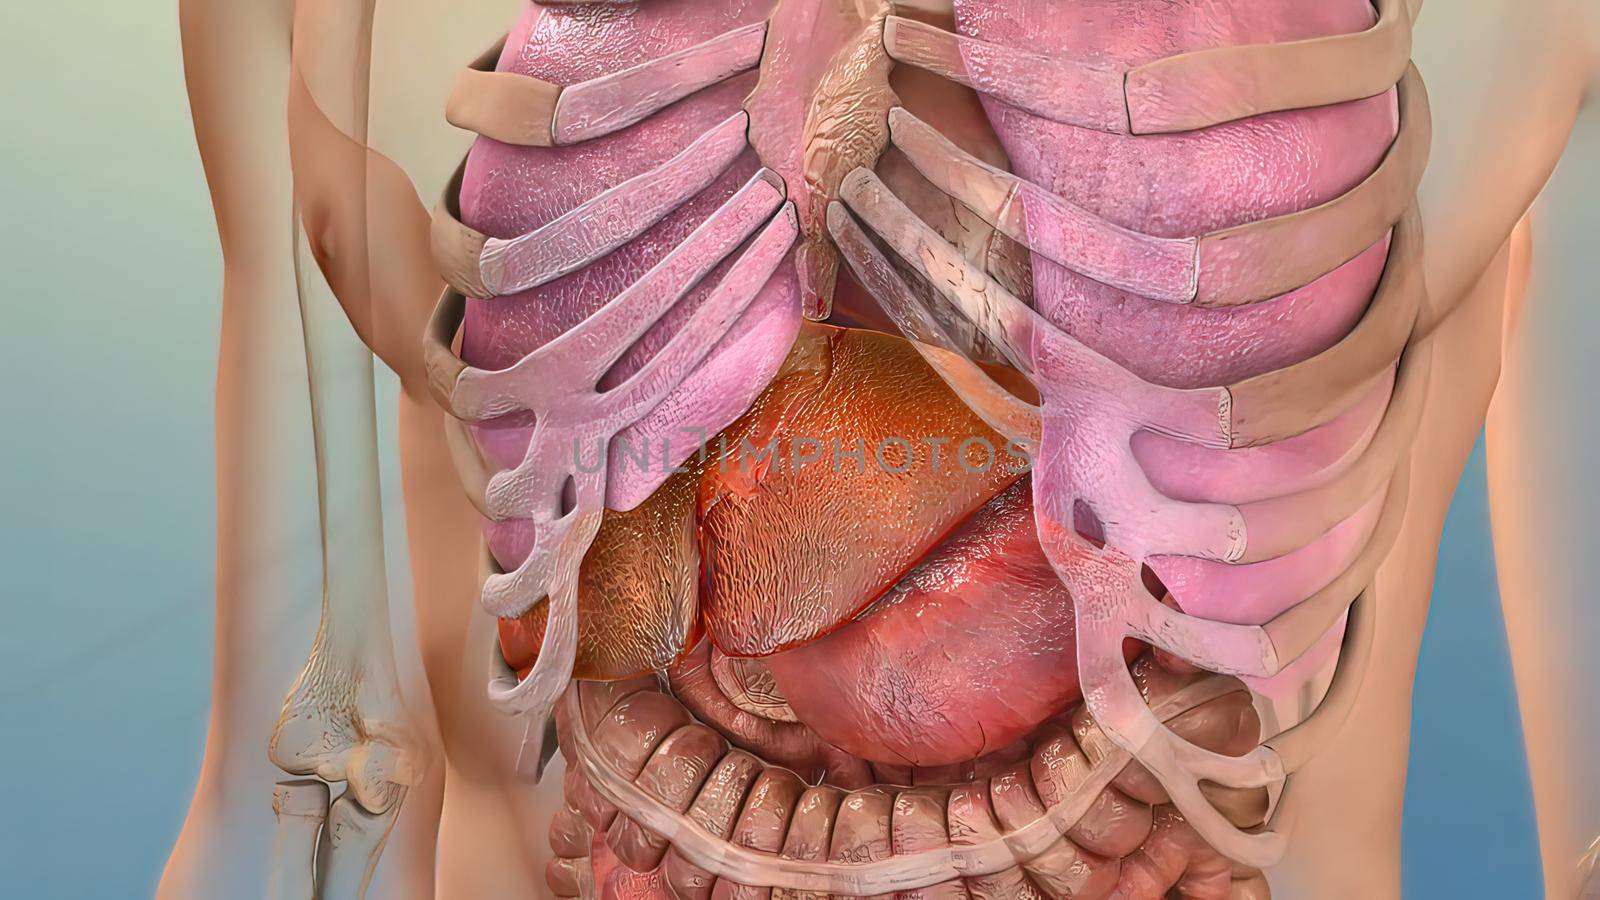 Human Internal Digestive Organ Liver Anatomy 3D illustration Concept. by creativepic